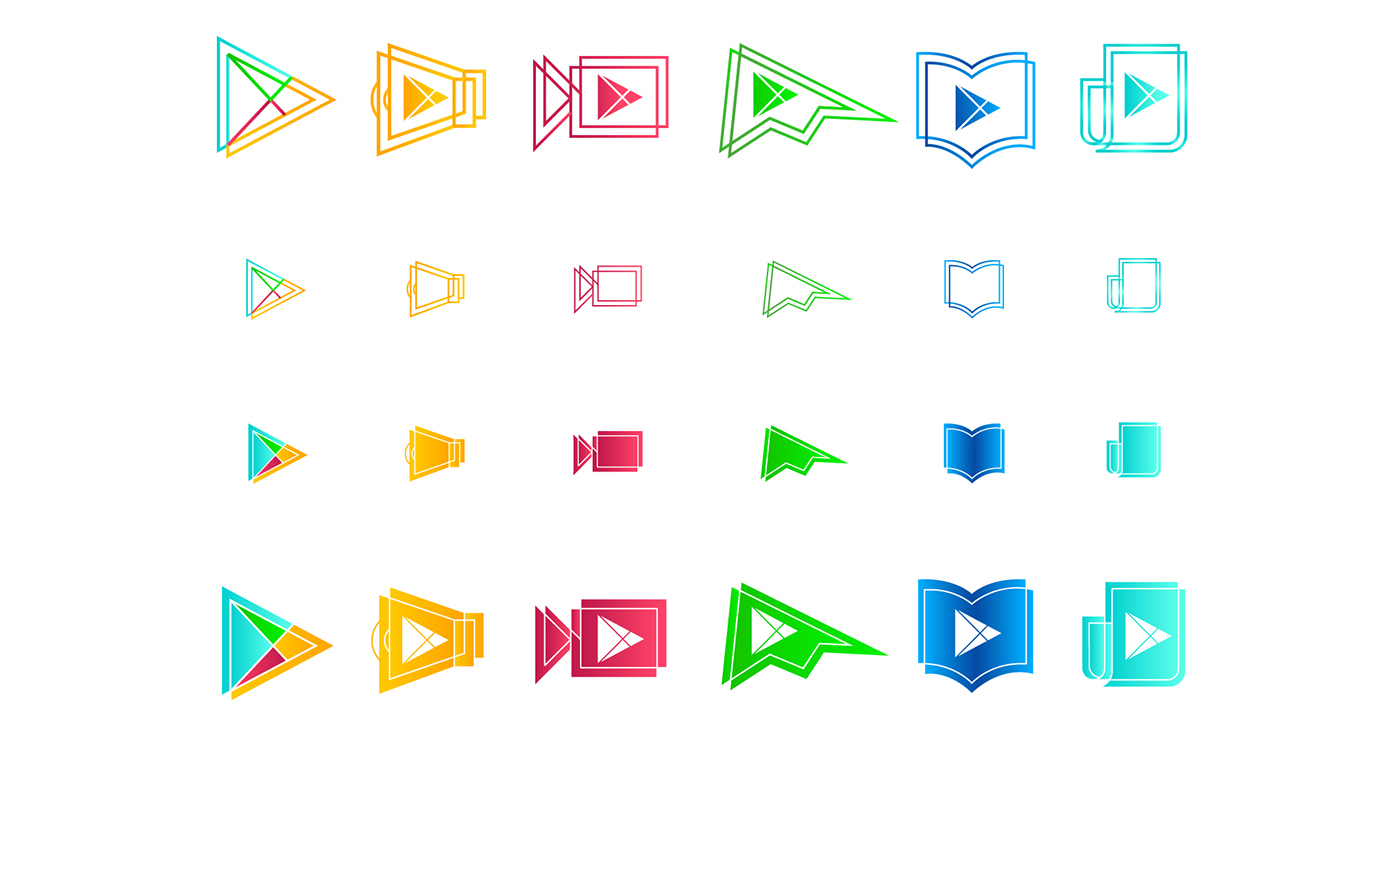 Google Play google icons iconography pictograms app pictogram UI branding  rebranding